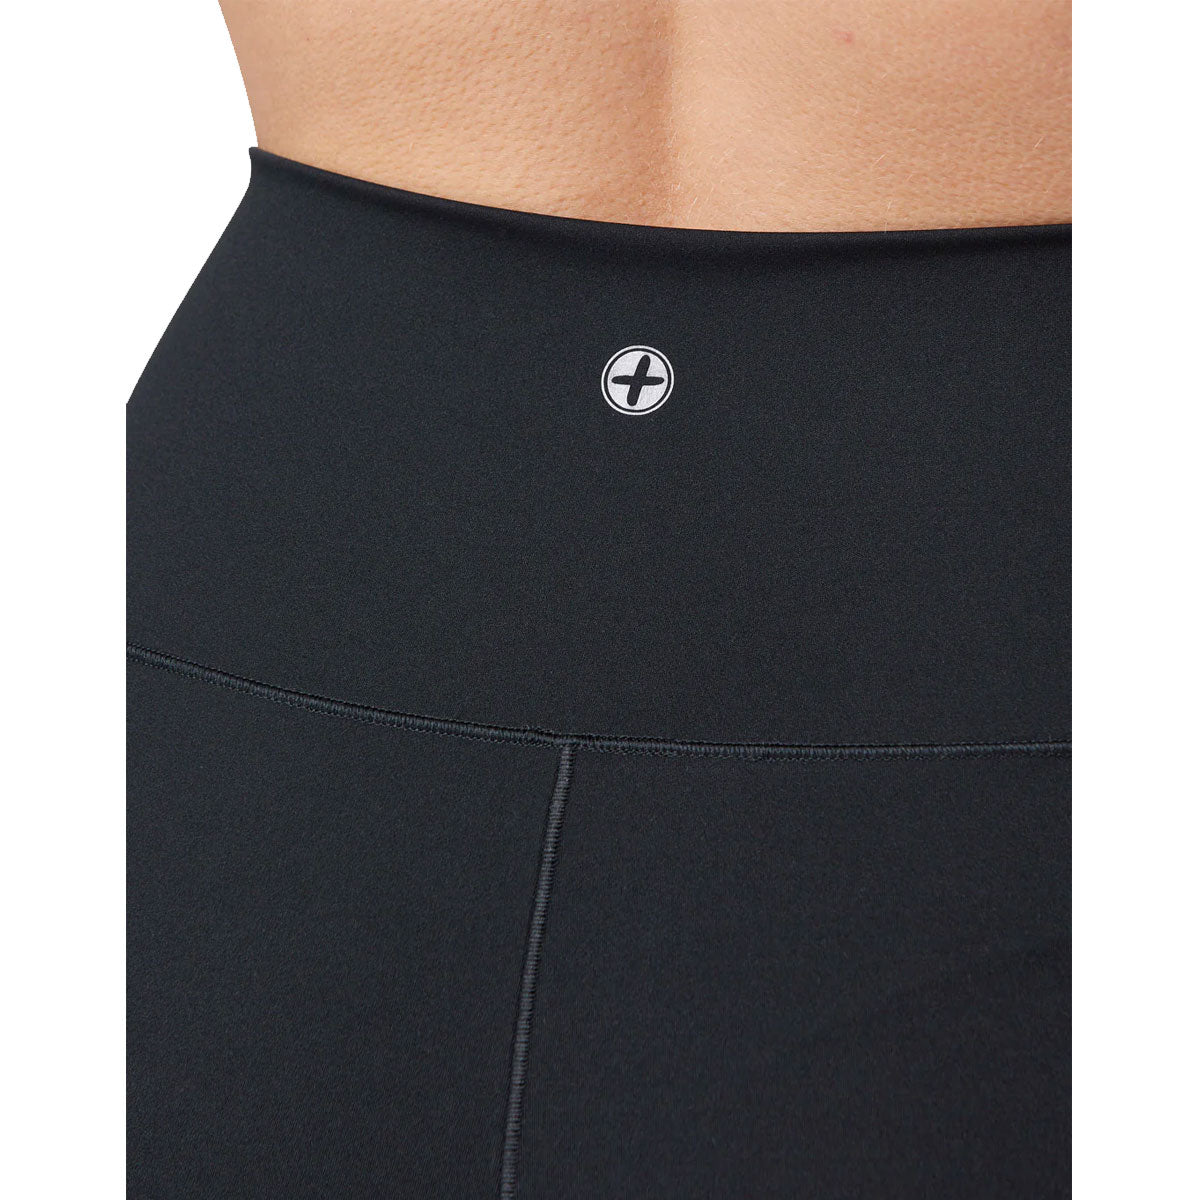 Gym+Coffee Aurora 5 inch Bike Shorts - Womens - Black